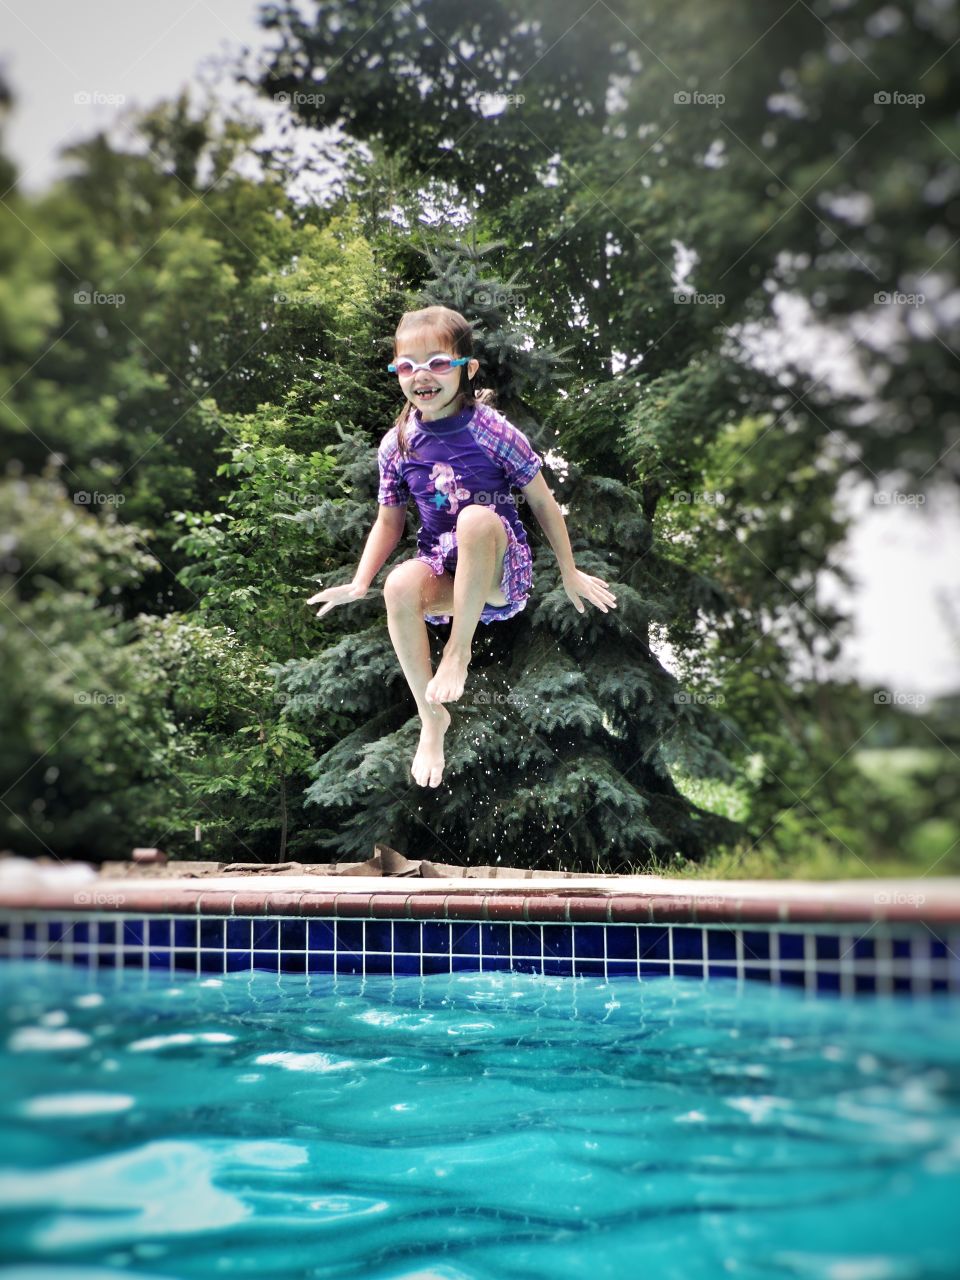 Cute girl jumping in swimming pool